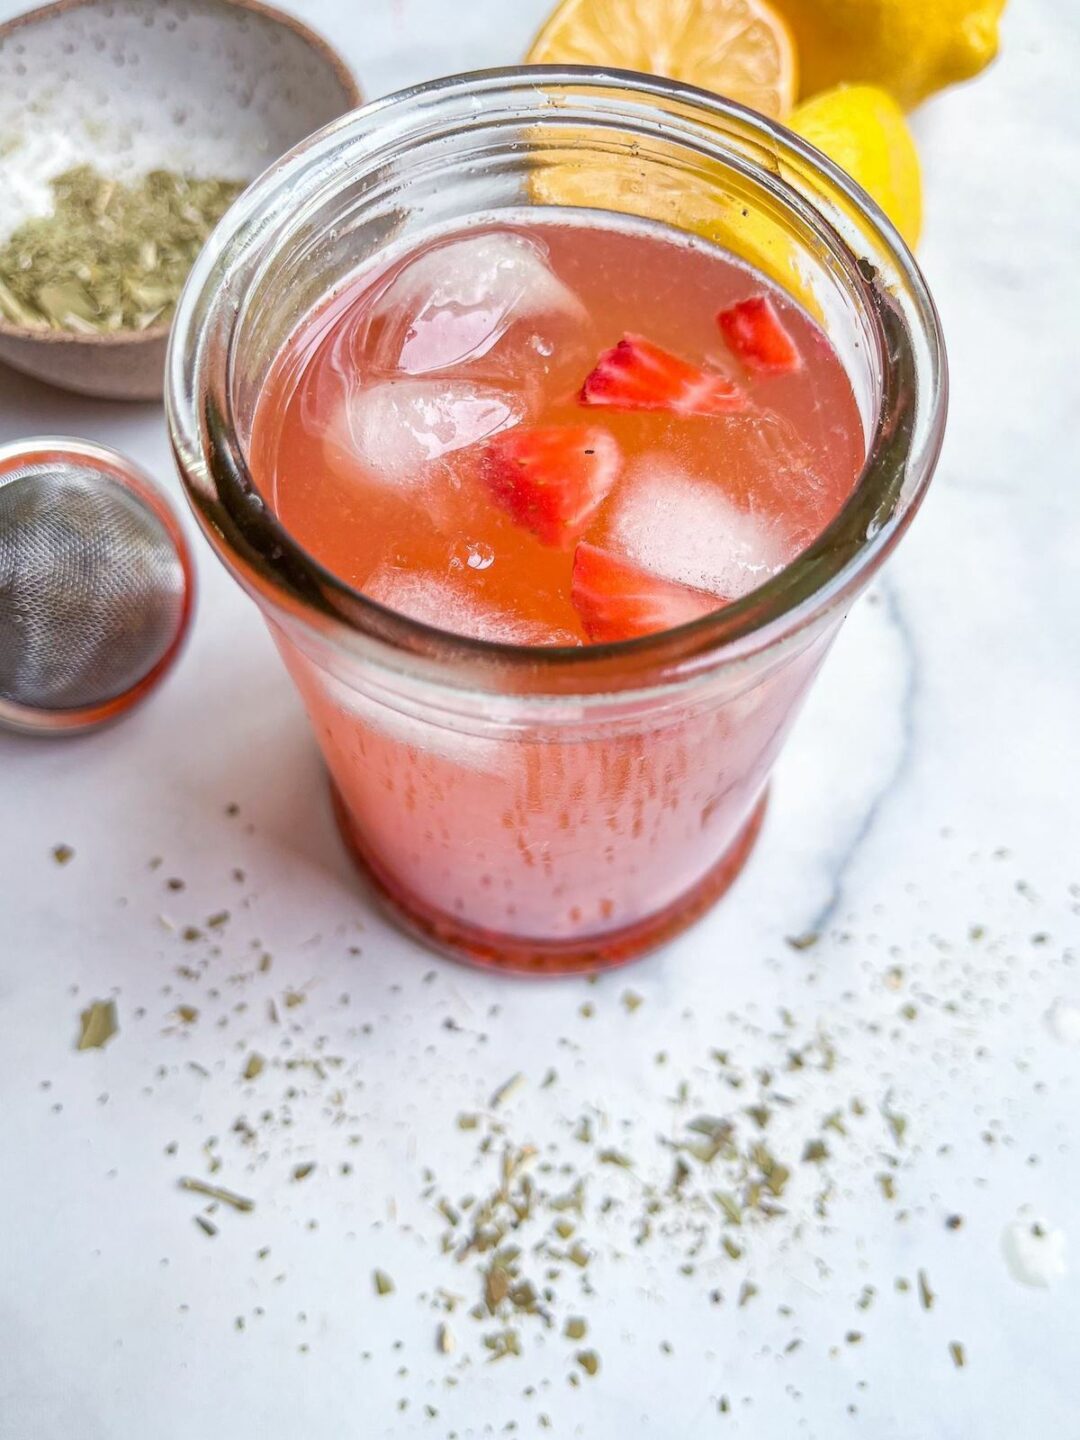 Lemon-strawberry yerba mate in a glass